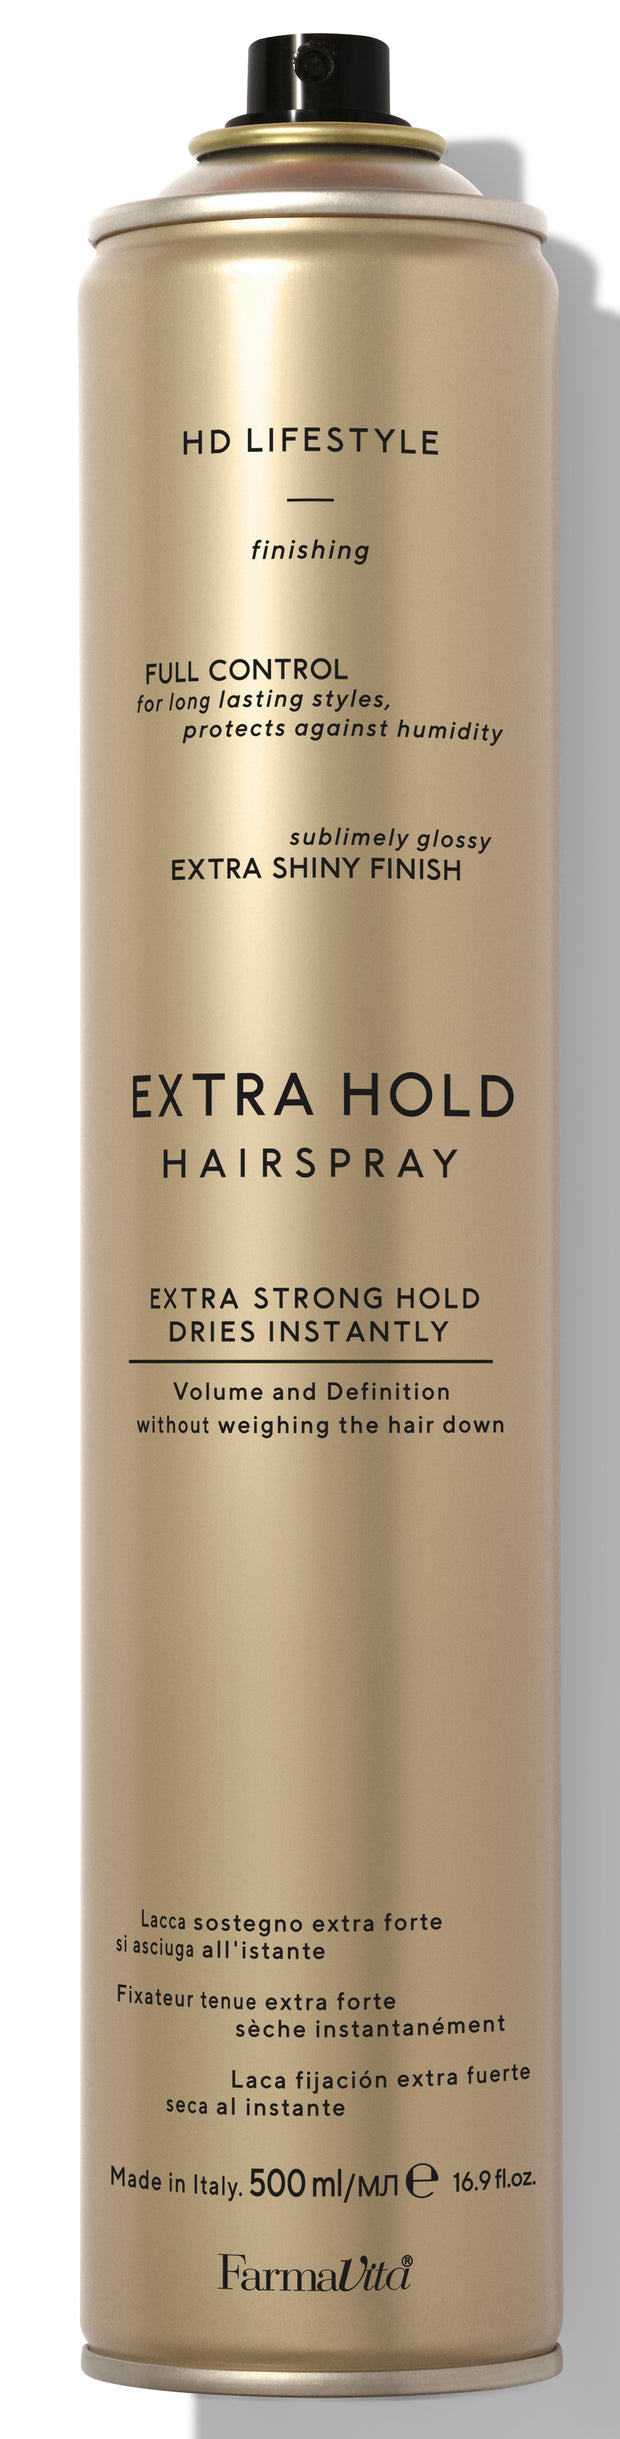 Extra Hold Hairspray 500ml - HD Lifestyle